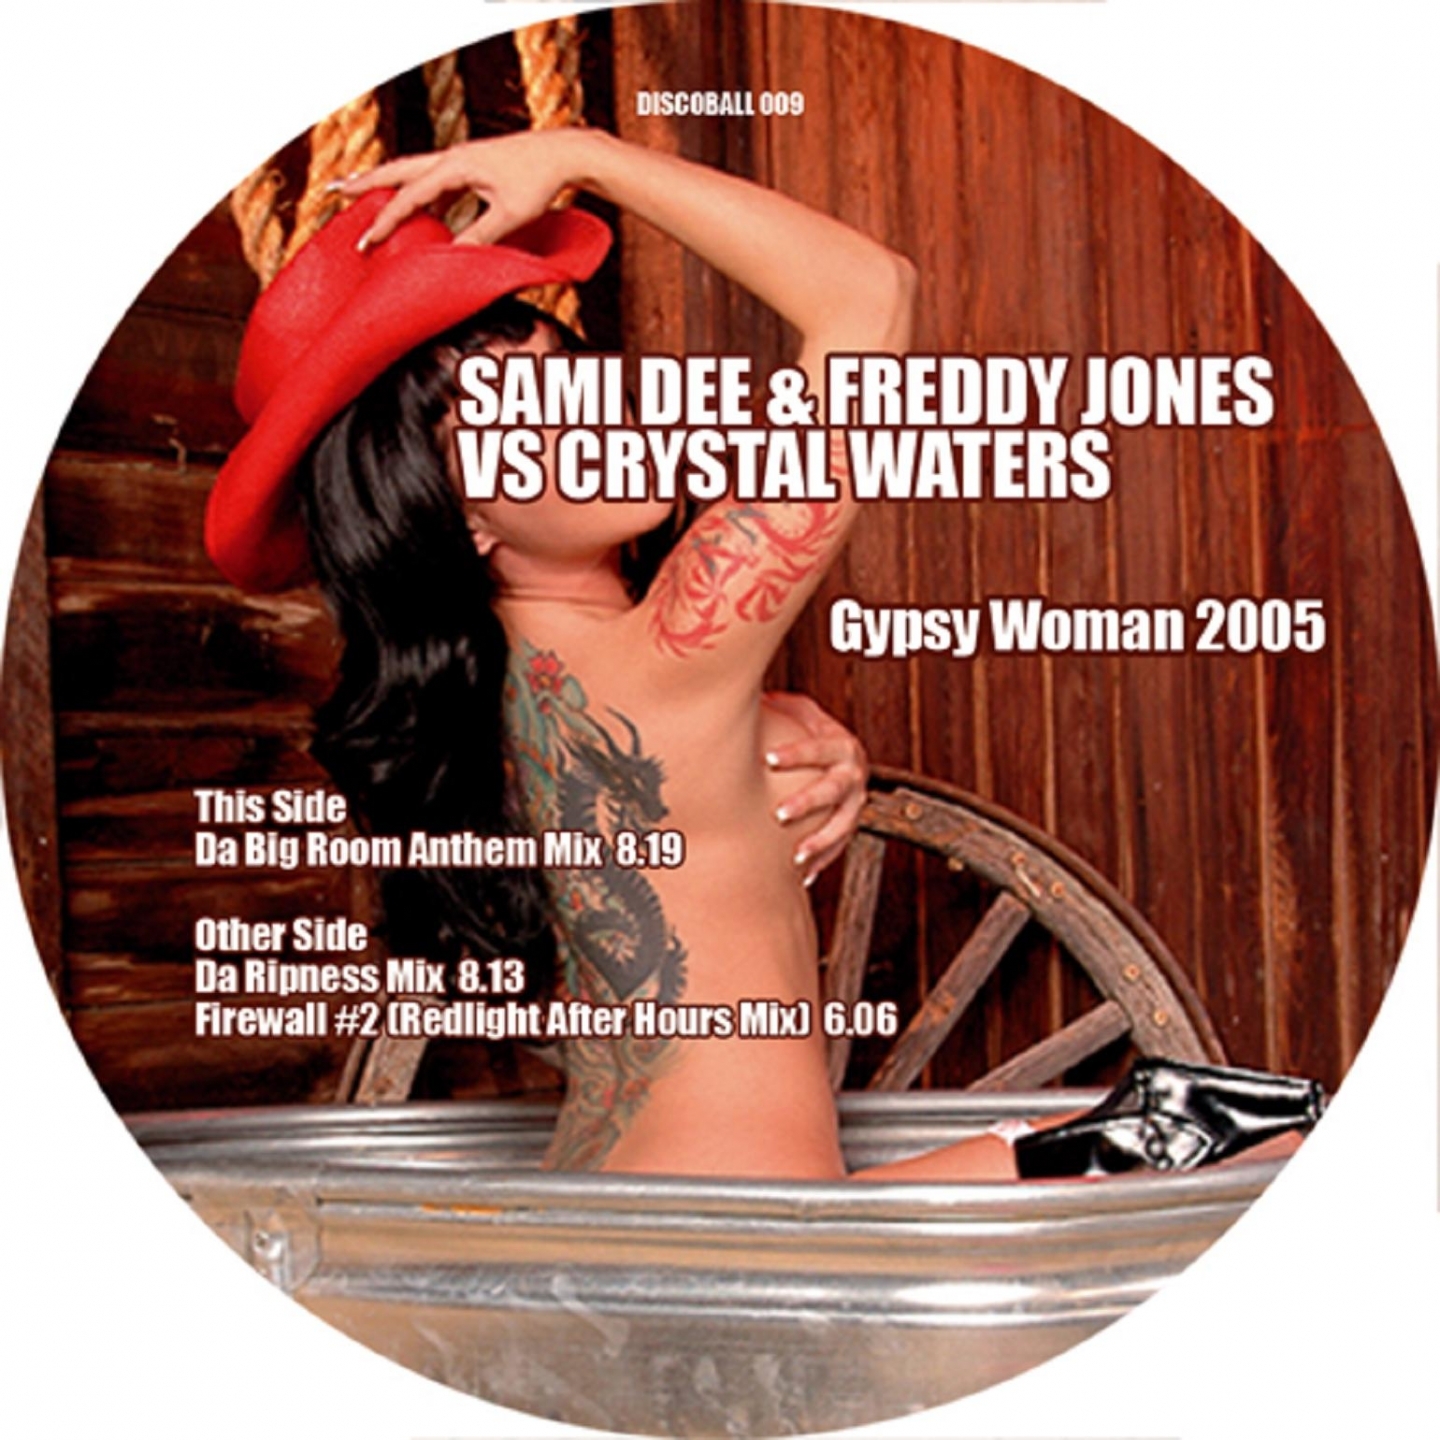 Gypsy Woman 2006 (La-Da-Dee) (The Disco Boys Remix)